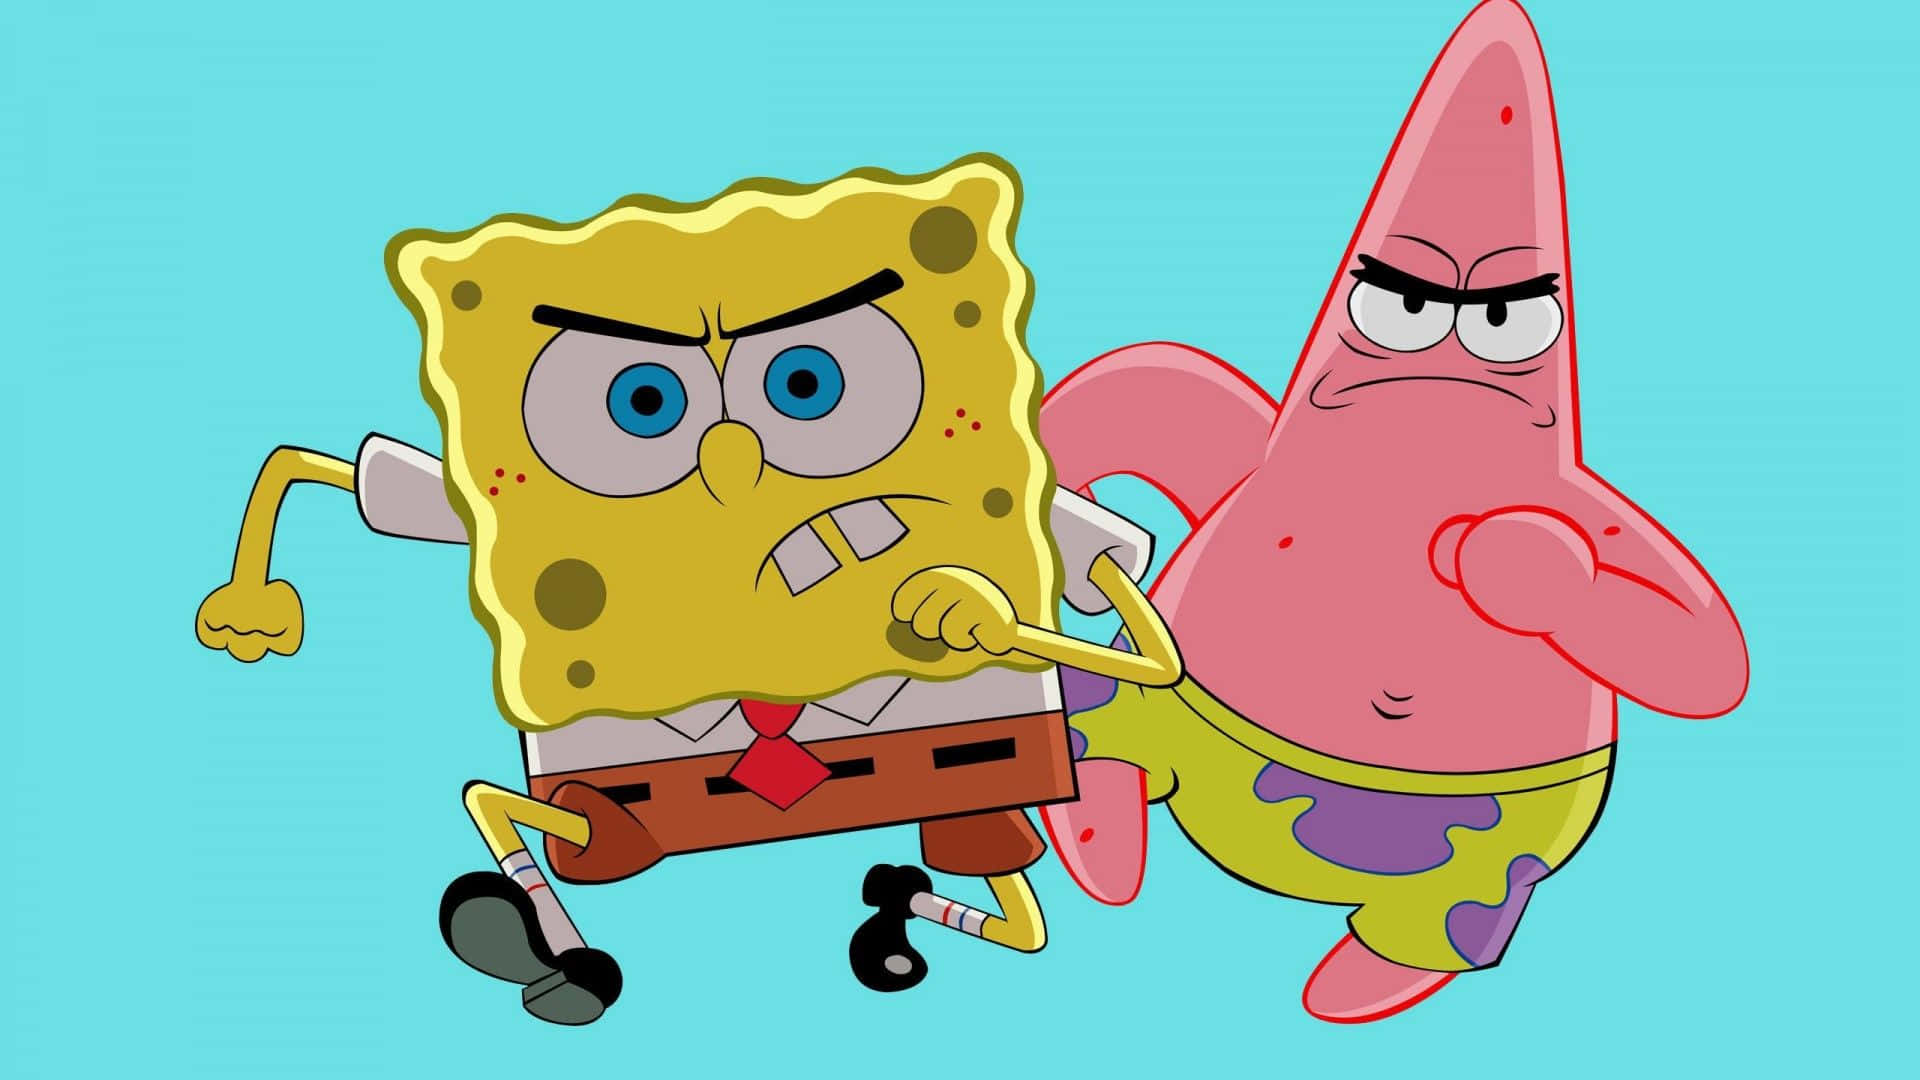 funny spongebob and patrick moments